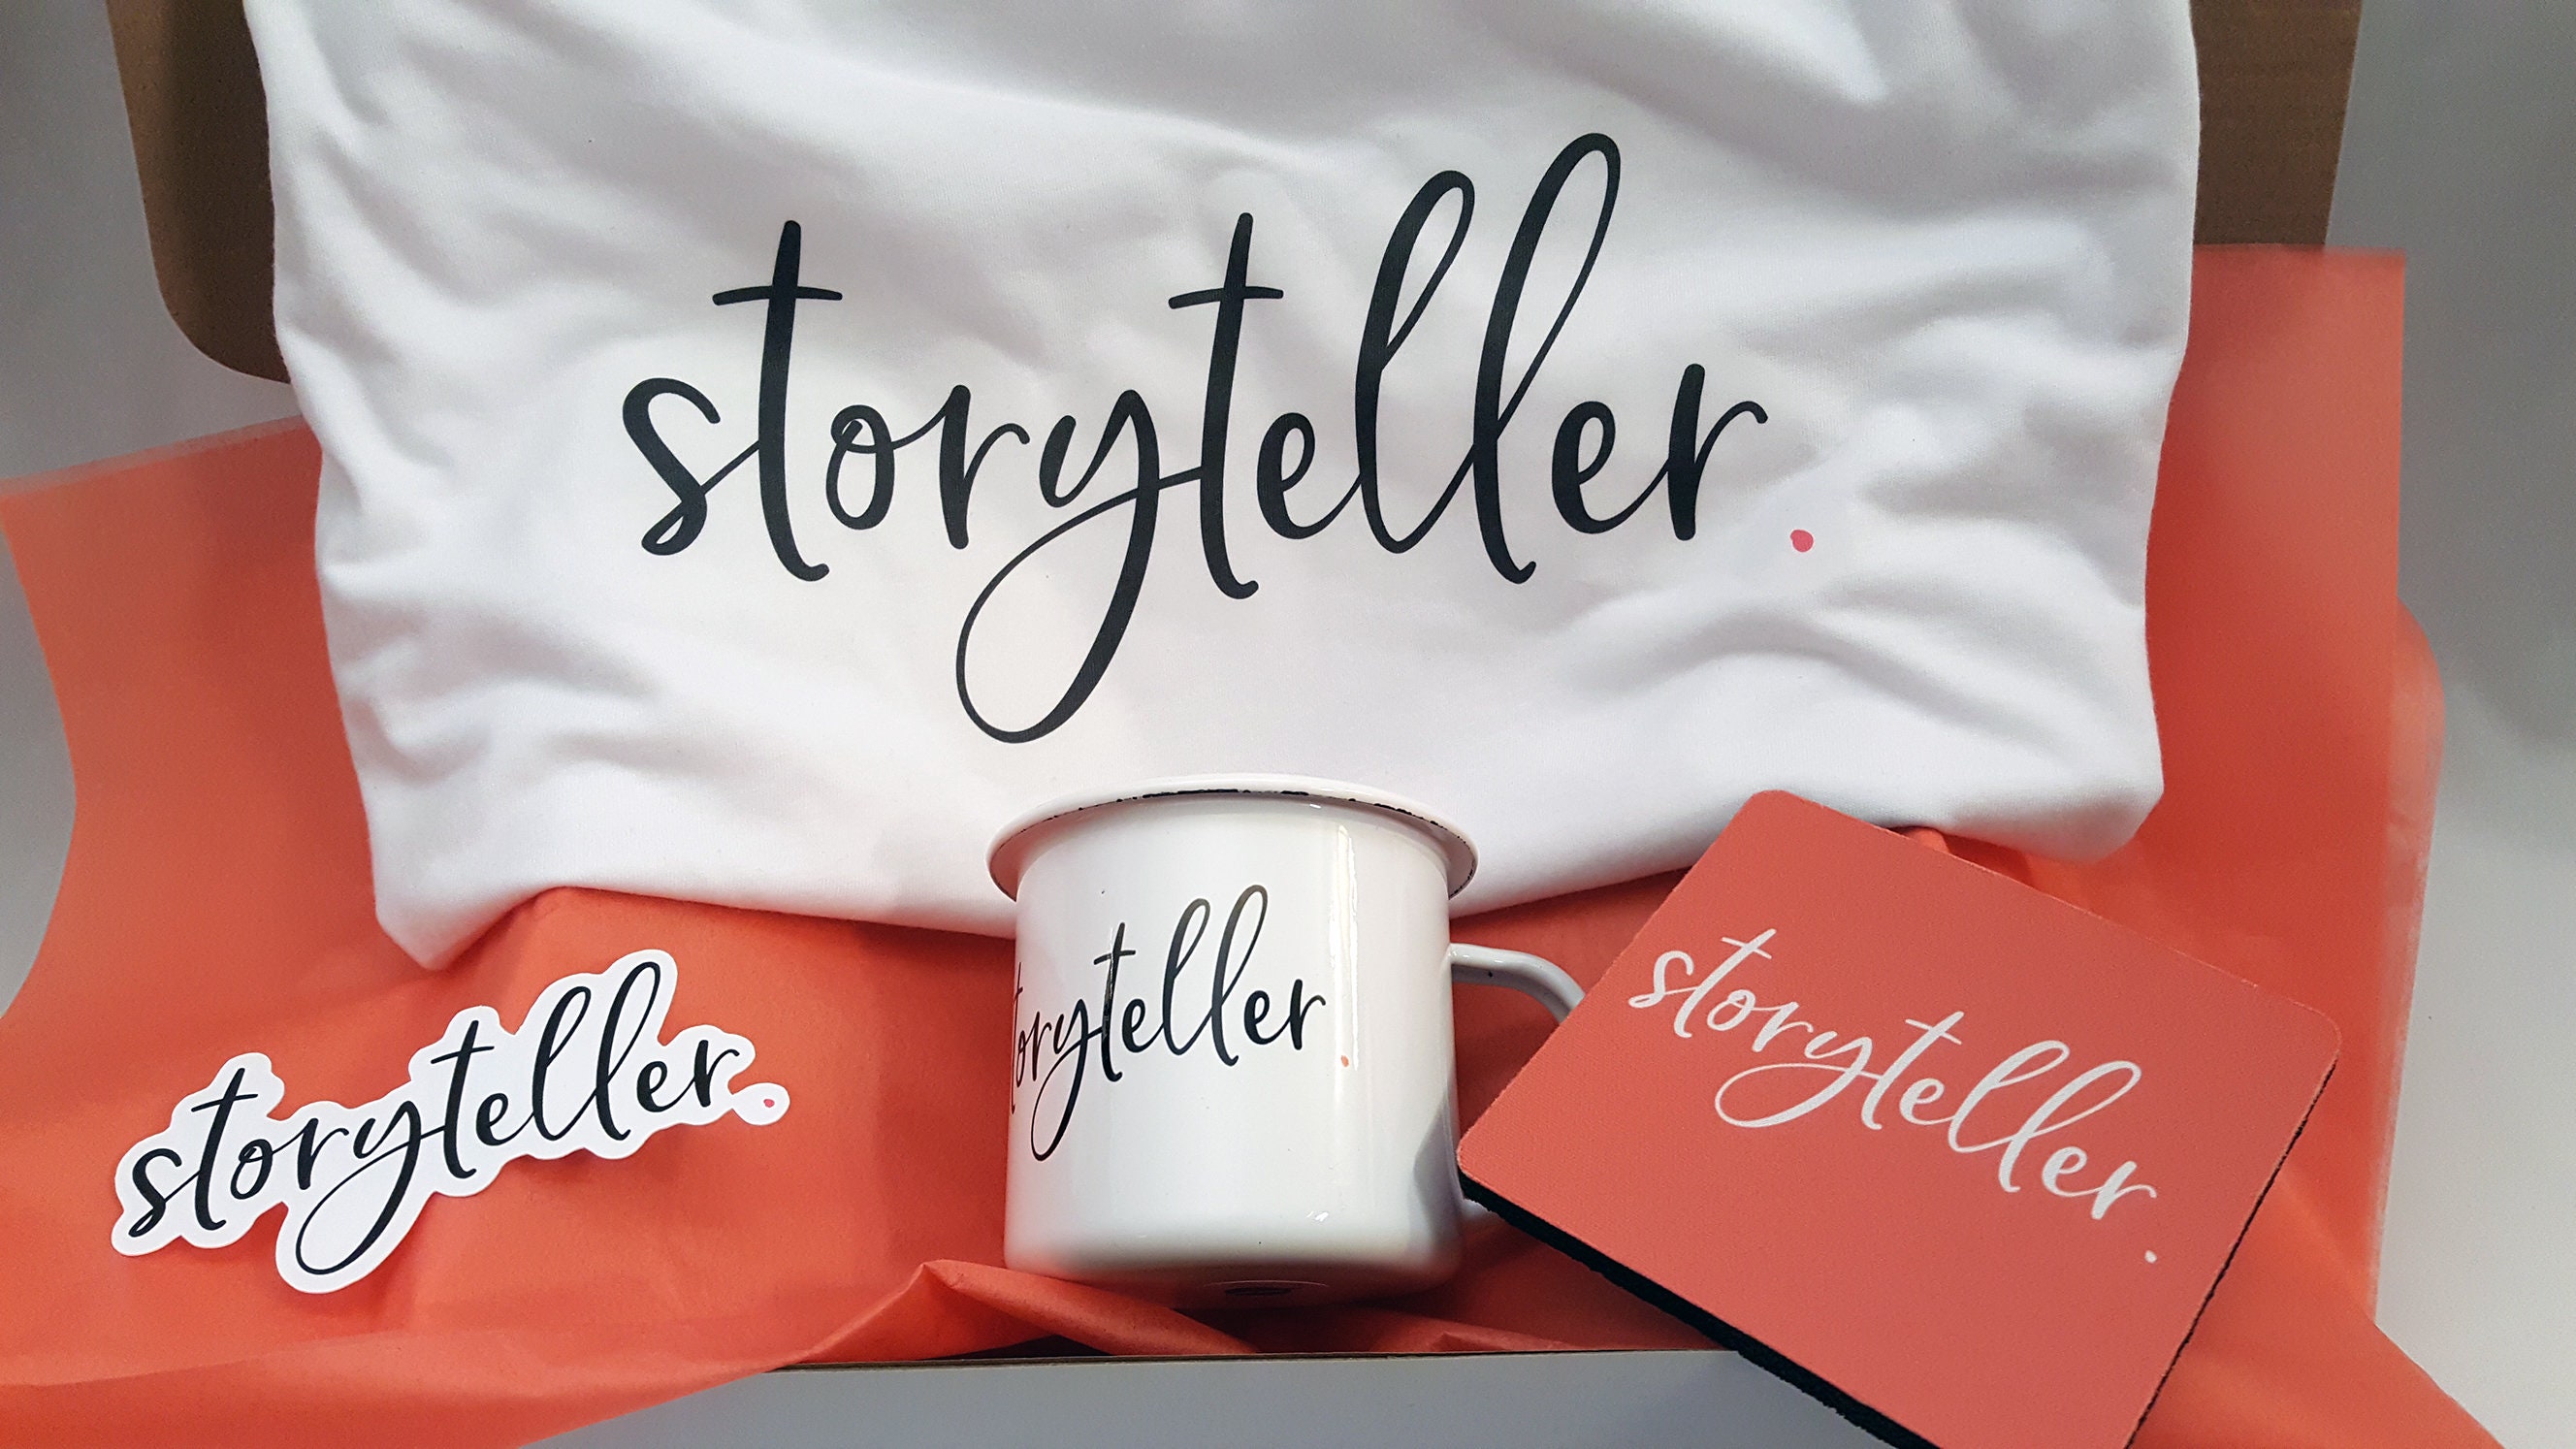 The Storyteller's Essentials Gift Box